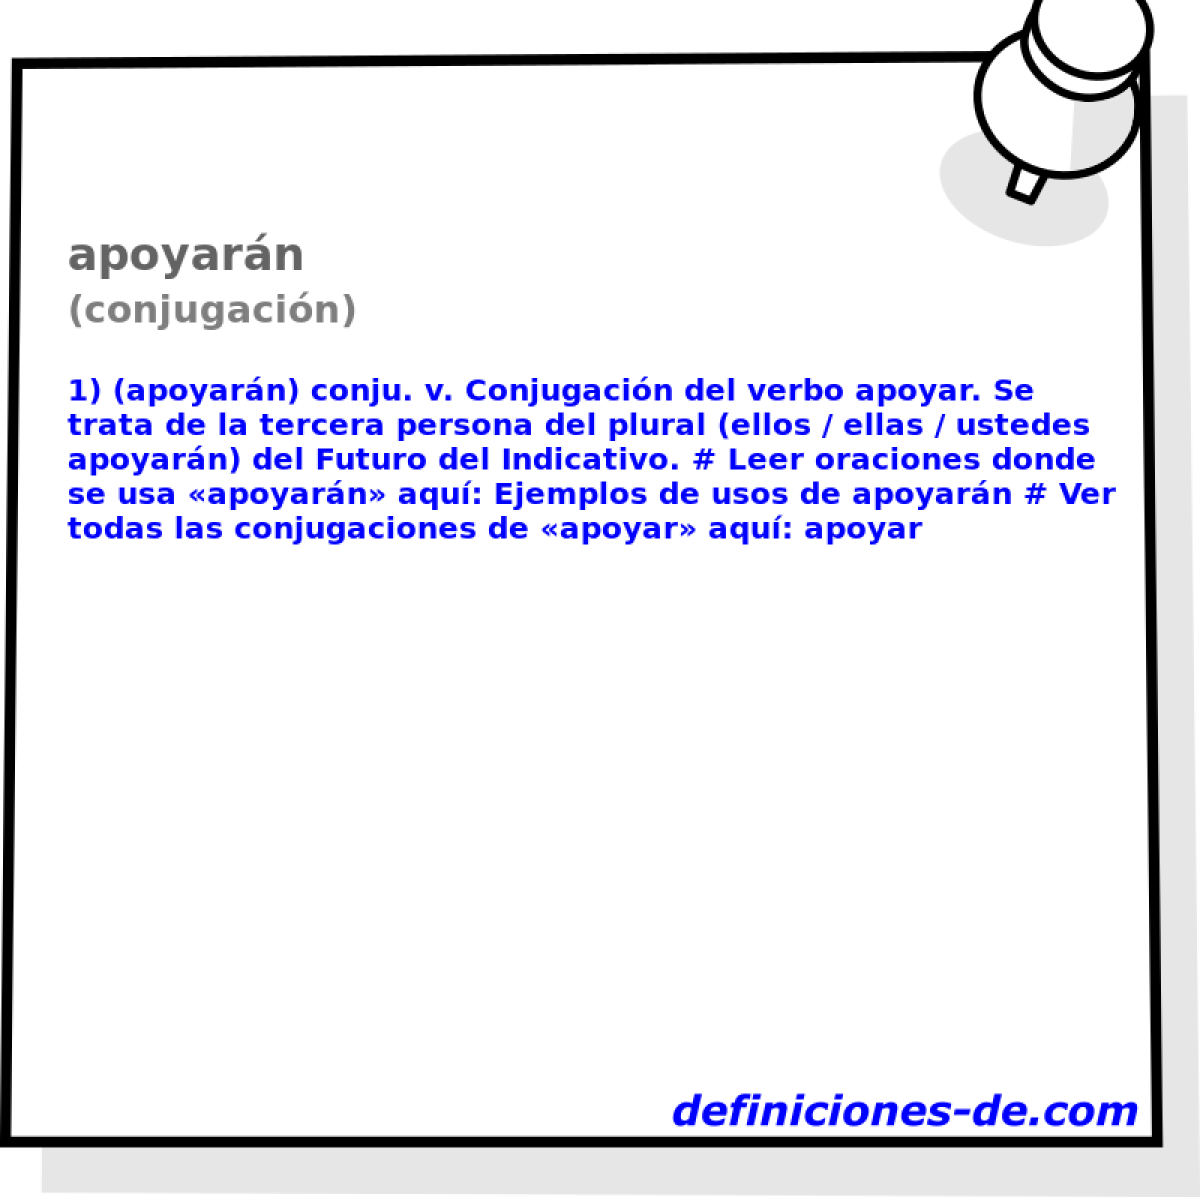 apoyarn (conjugacin)